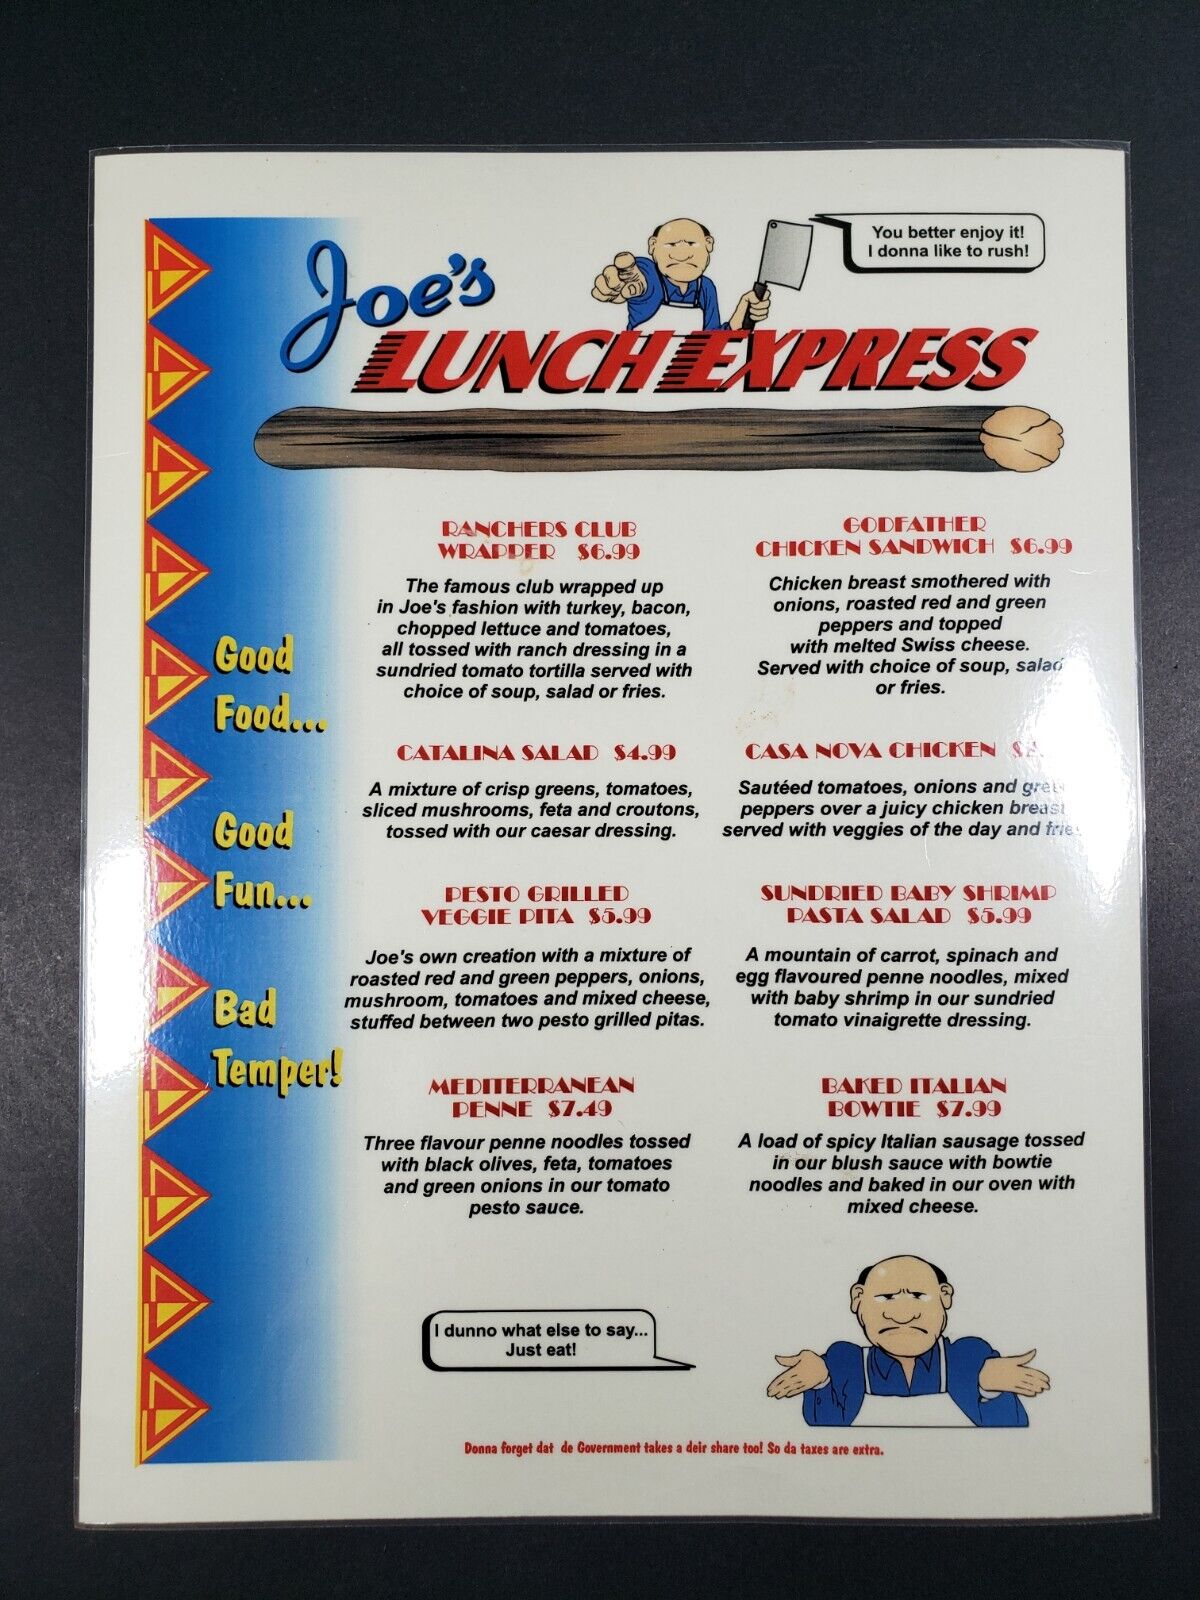 Restaurant Menu Crabby Joe’s Lunch Express Tap Grill London Ontario Bad Temper